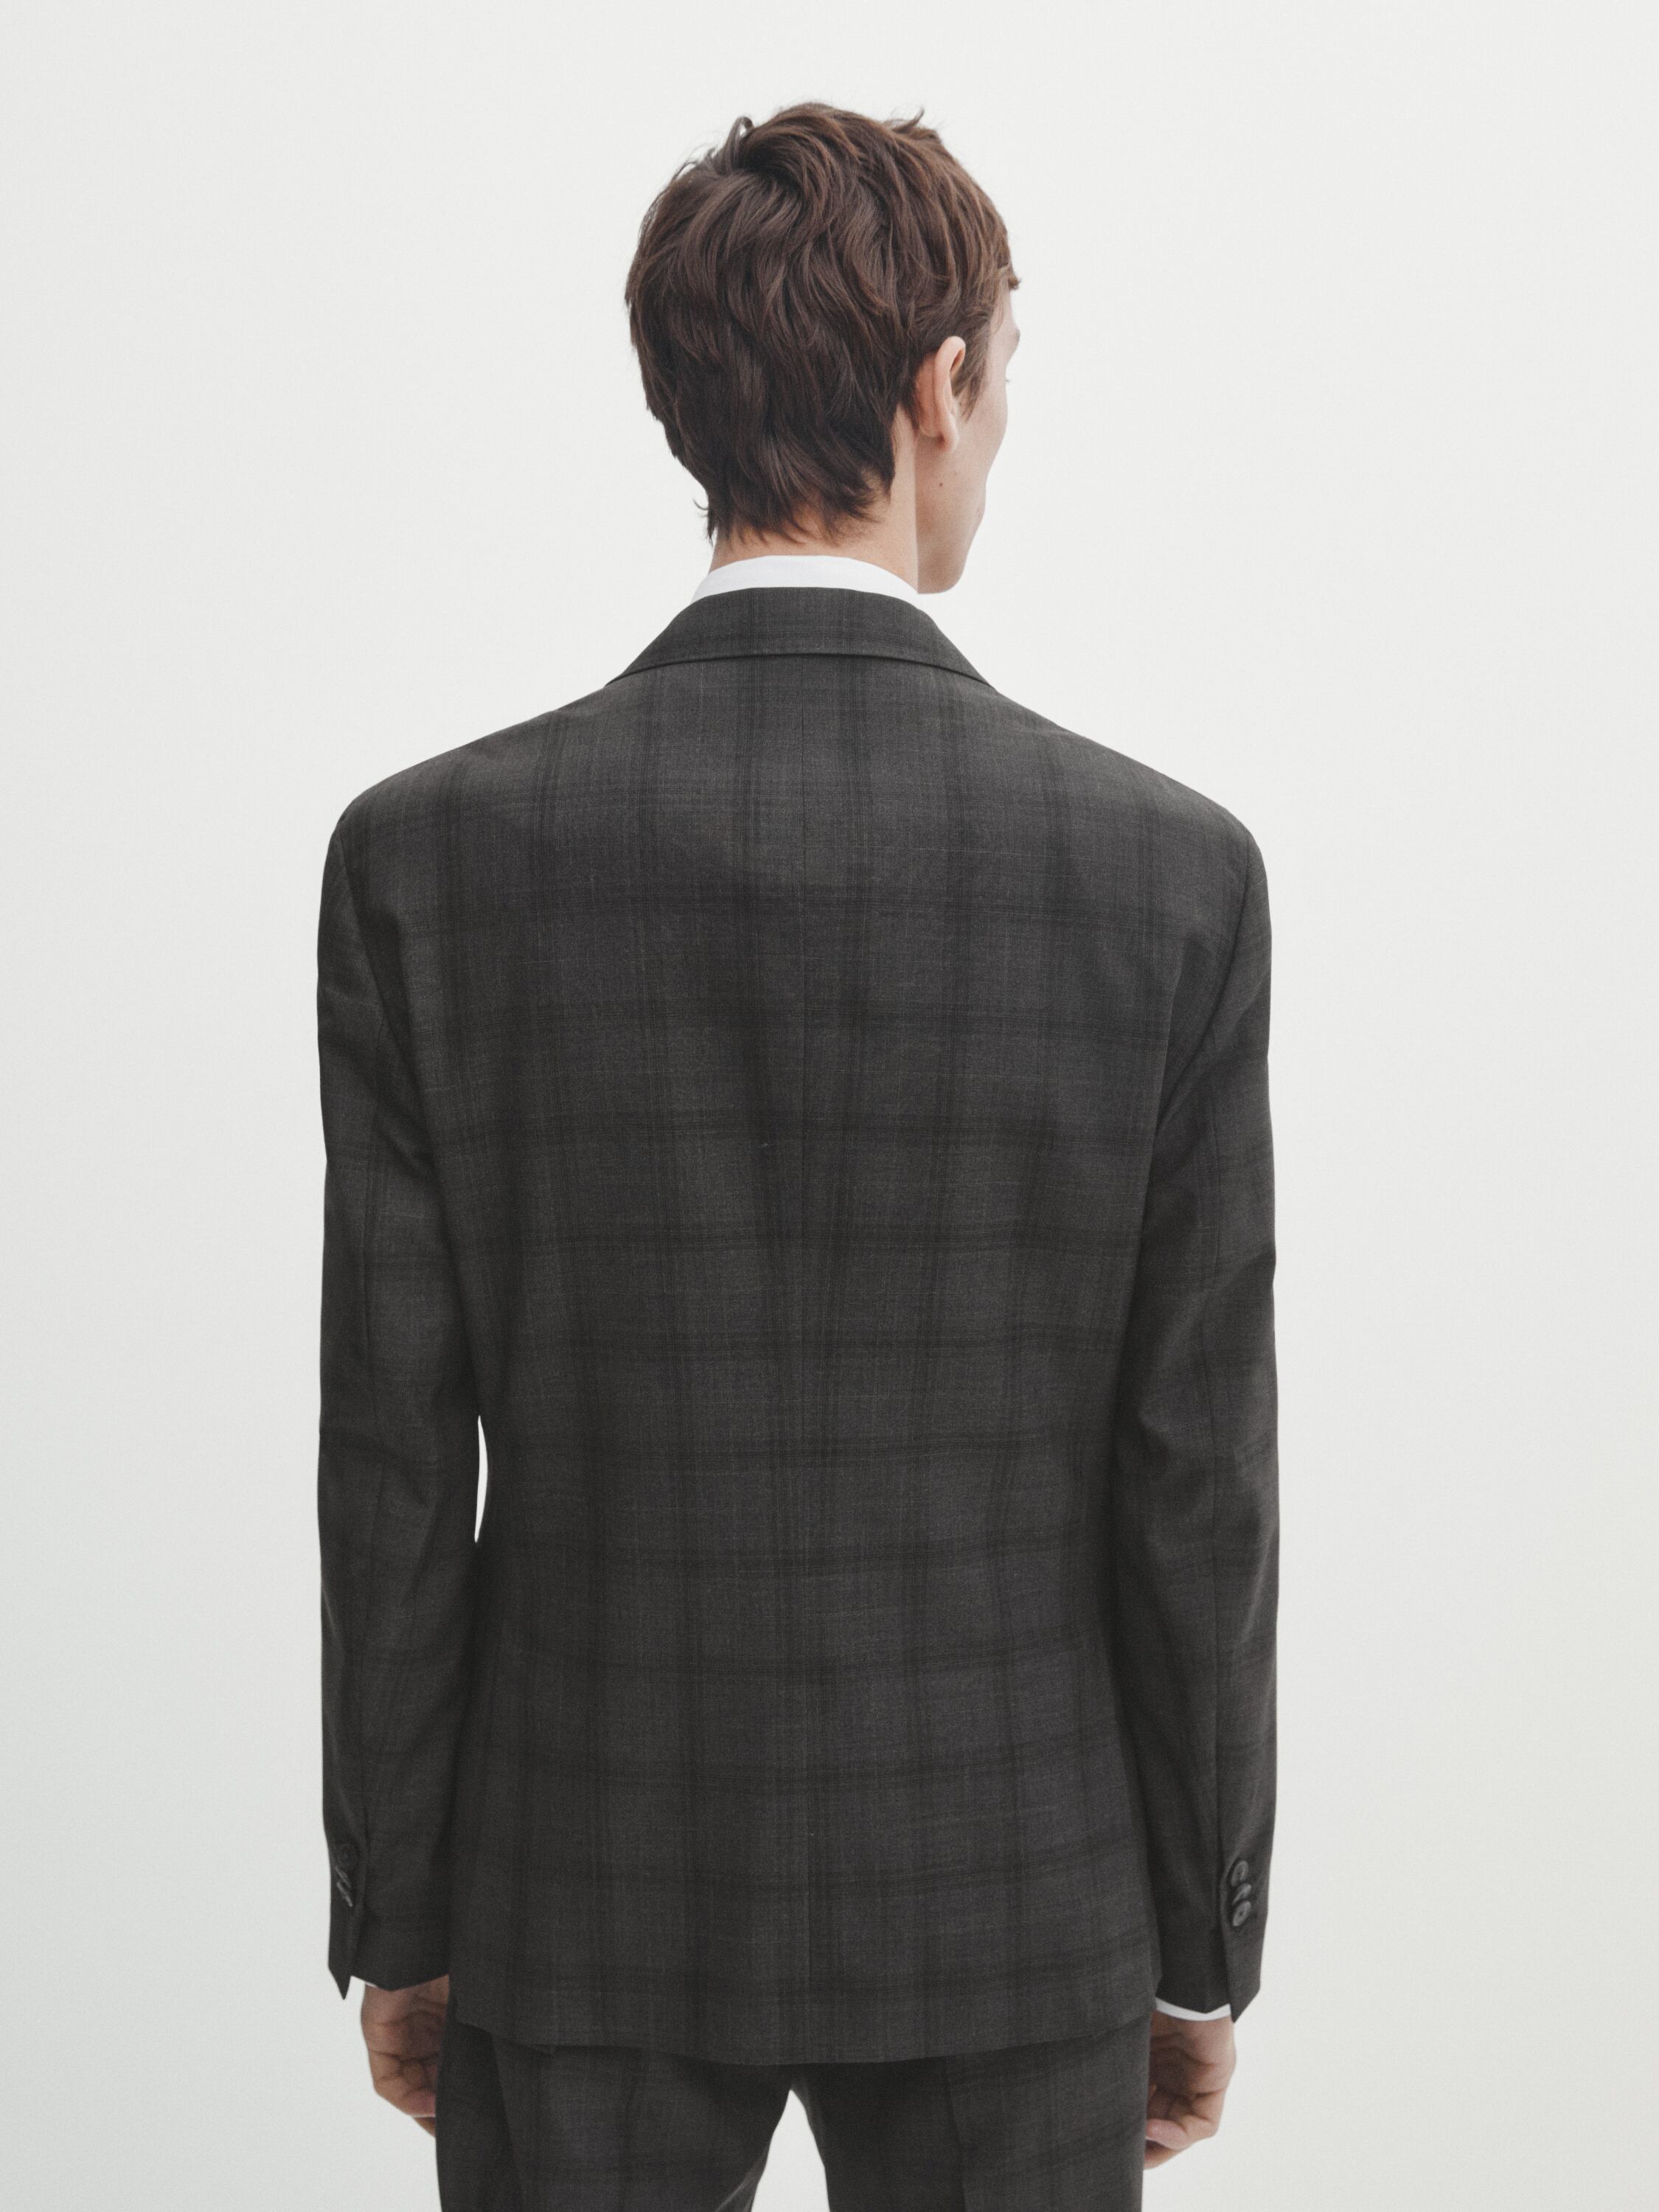 Windowpane check 110's wool suit blazer